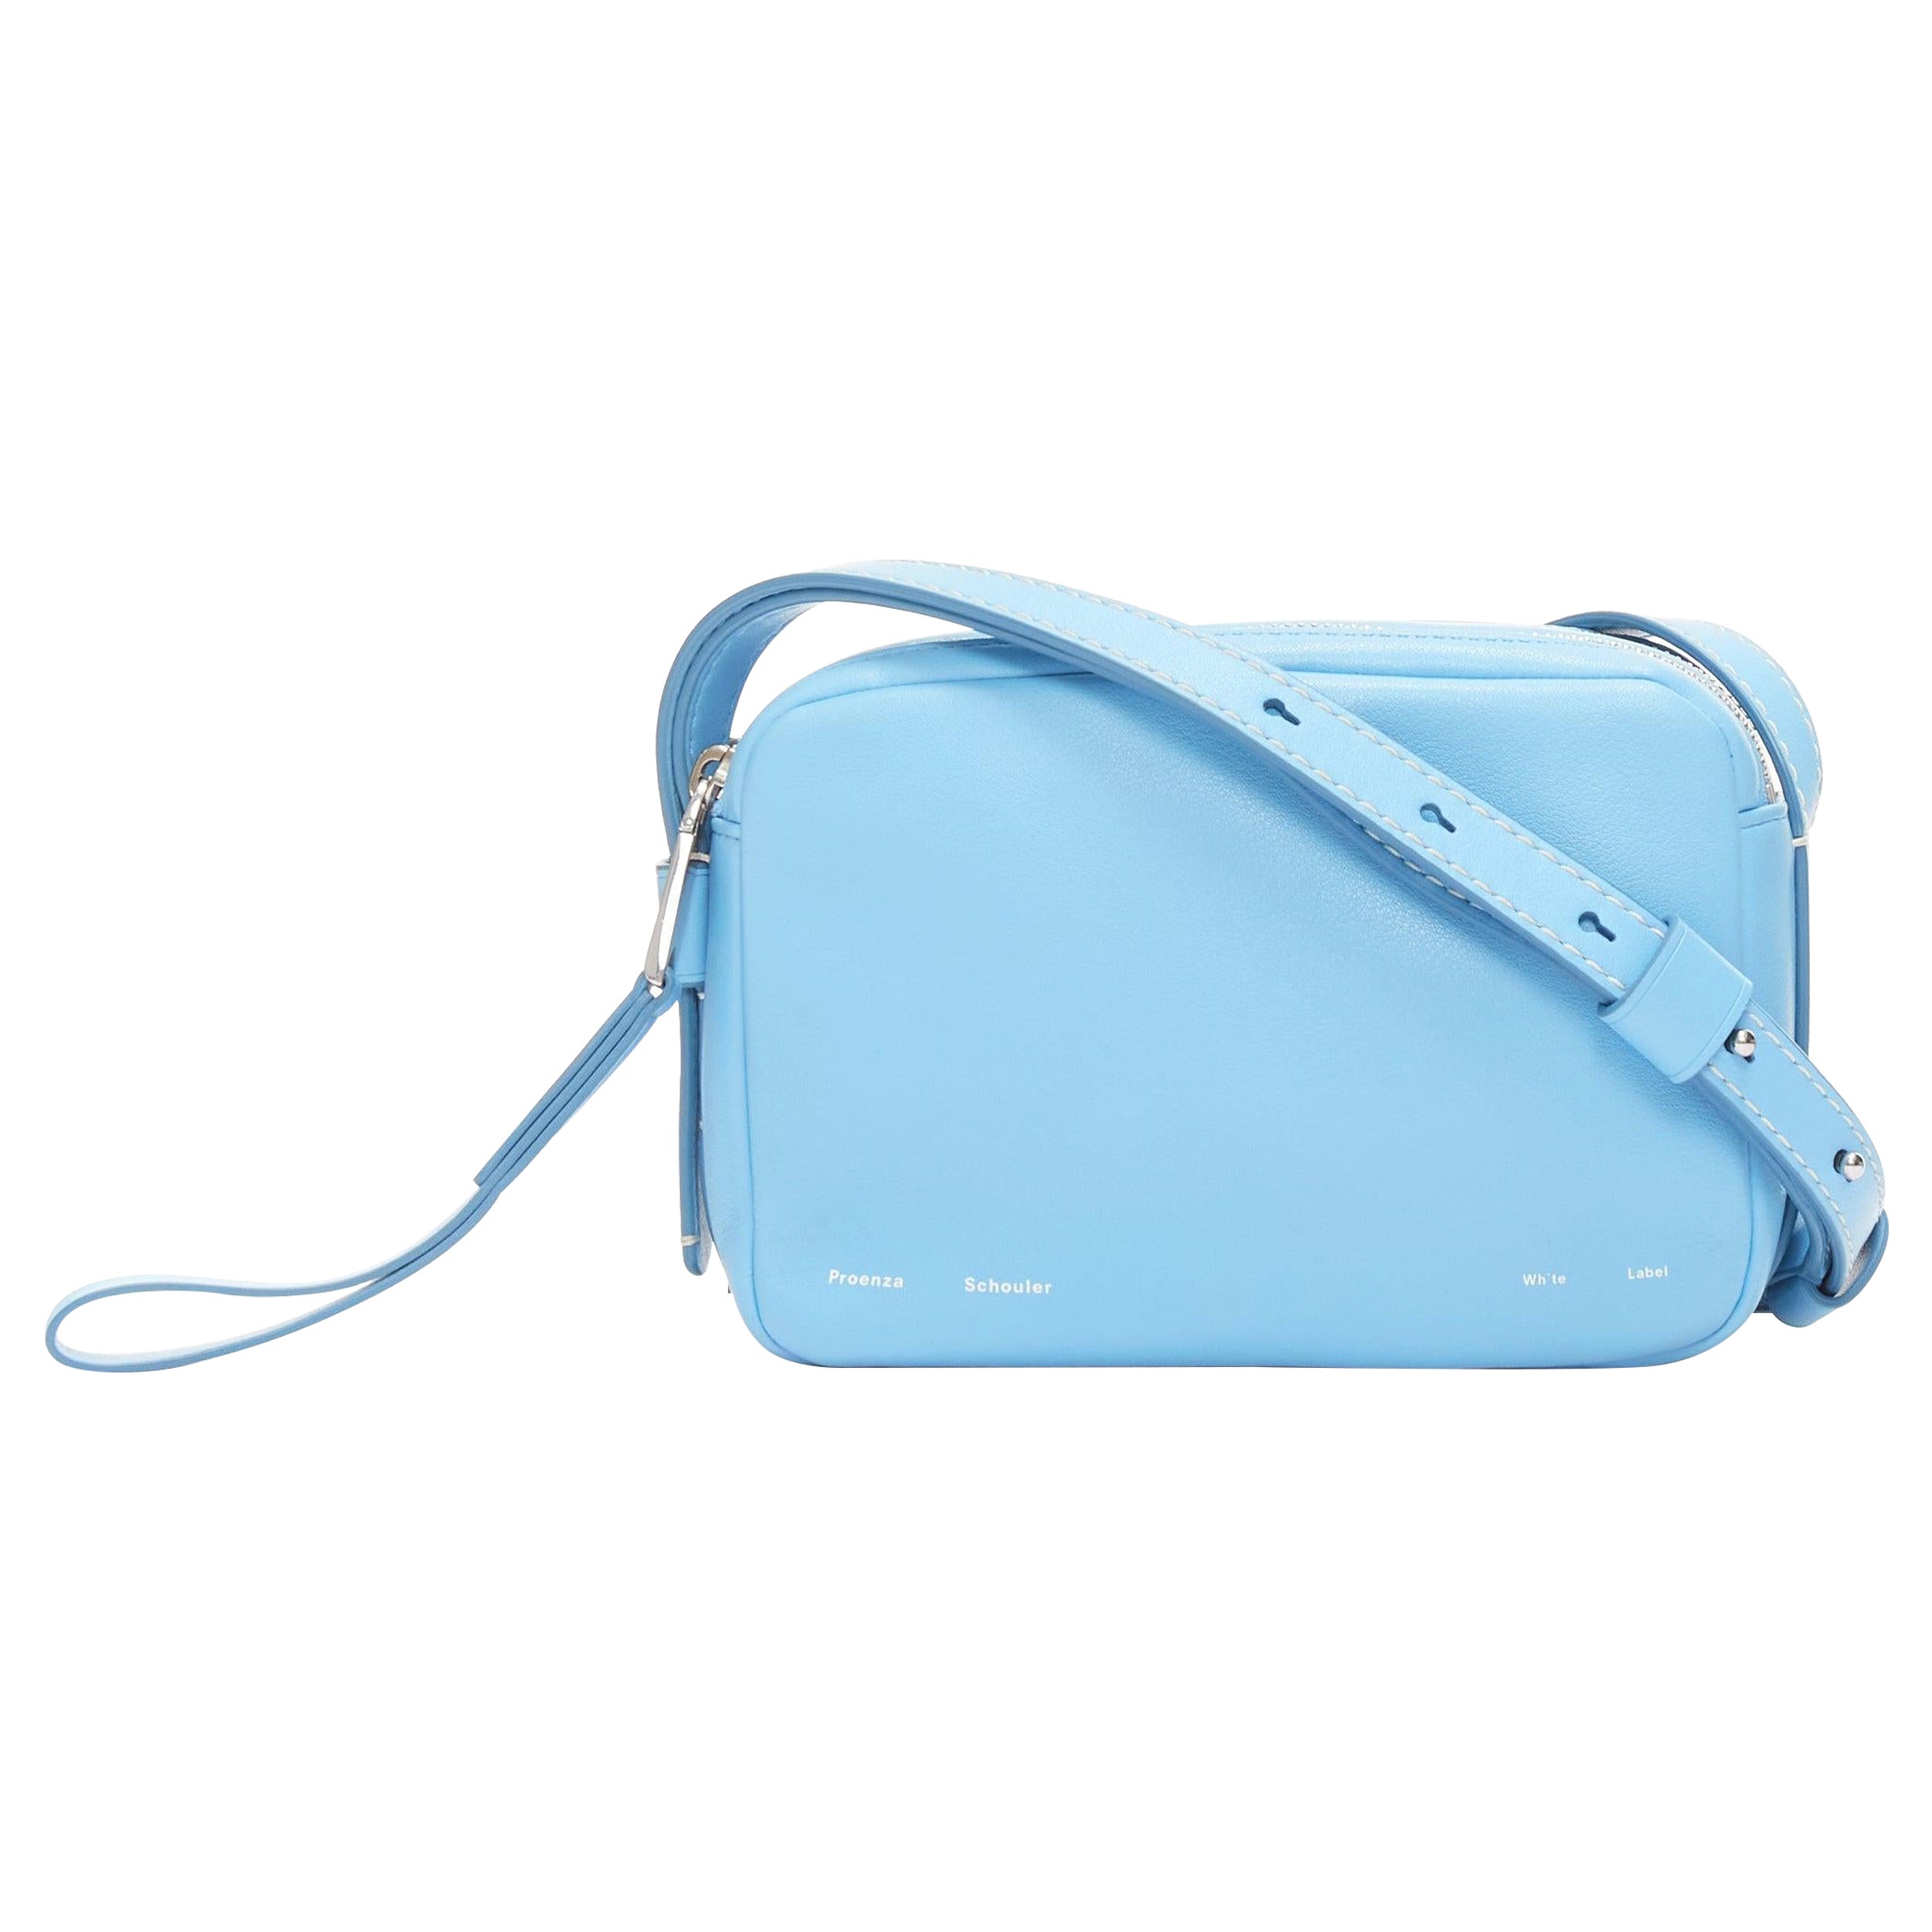 PROENZA SCHOULER White Label blue leather silver zipper crossbody camera bag For Sale